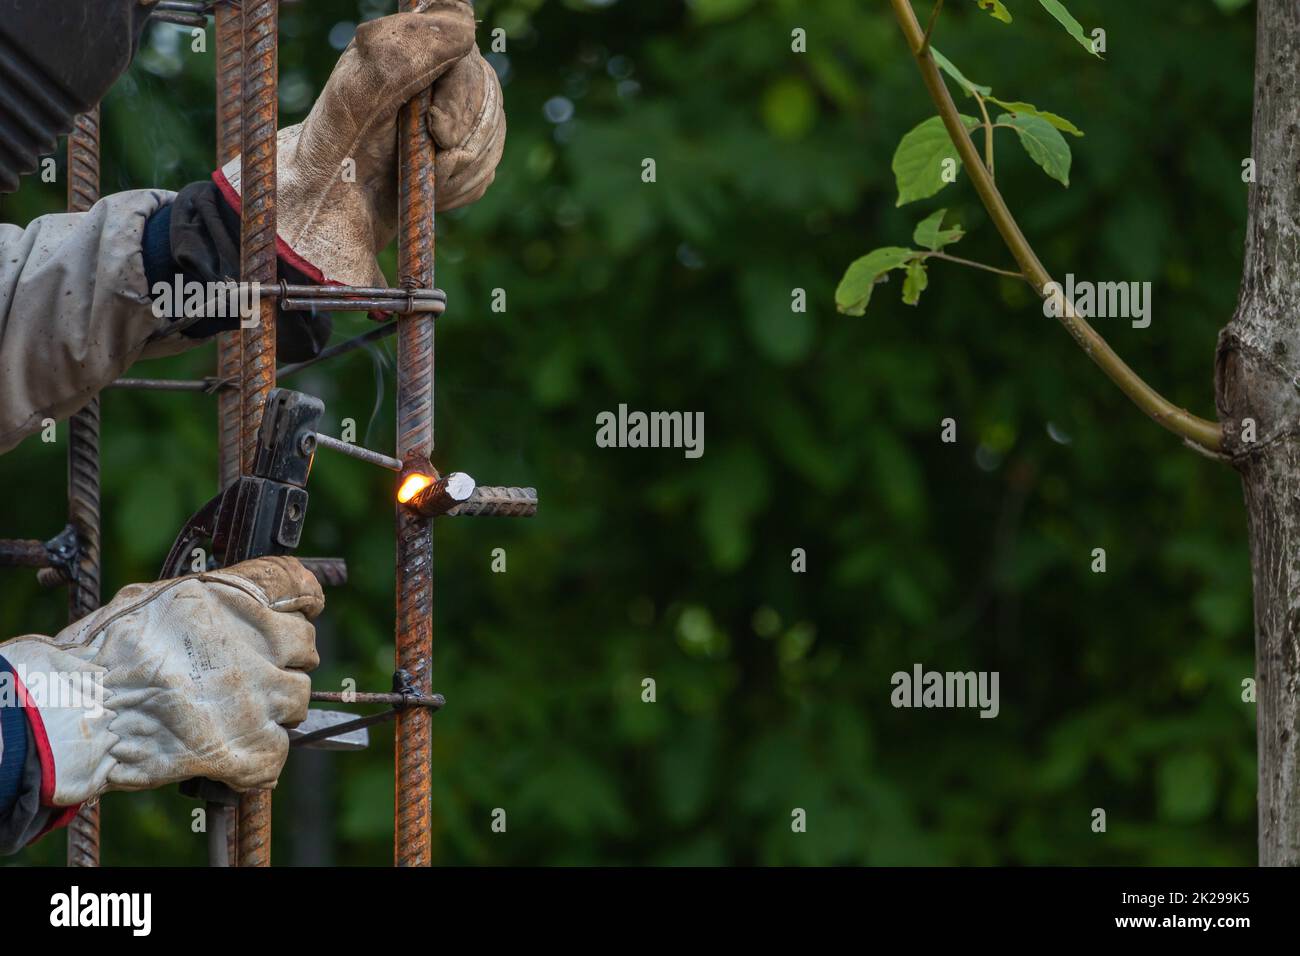 A worker welds a reinforcement - future column - construction concept. Green trees background Stock Photo